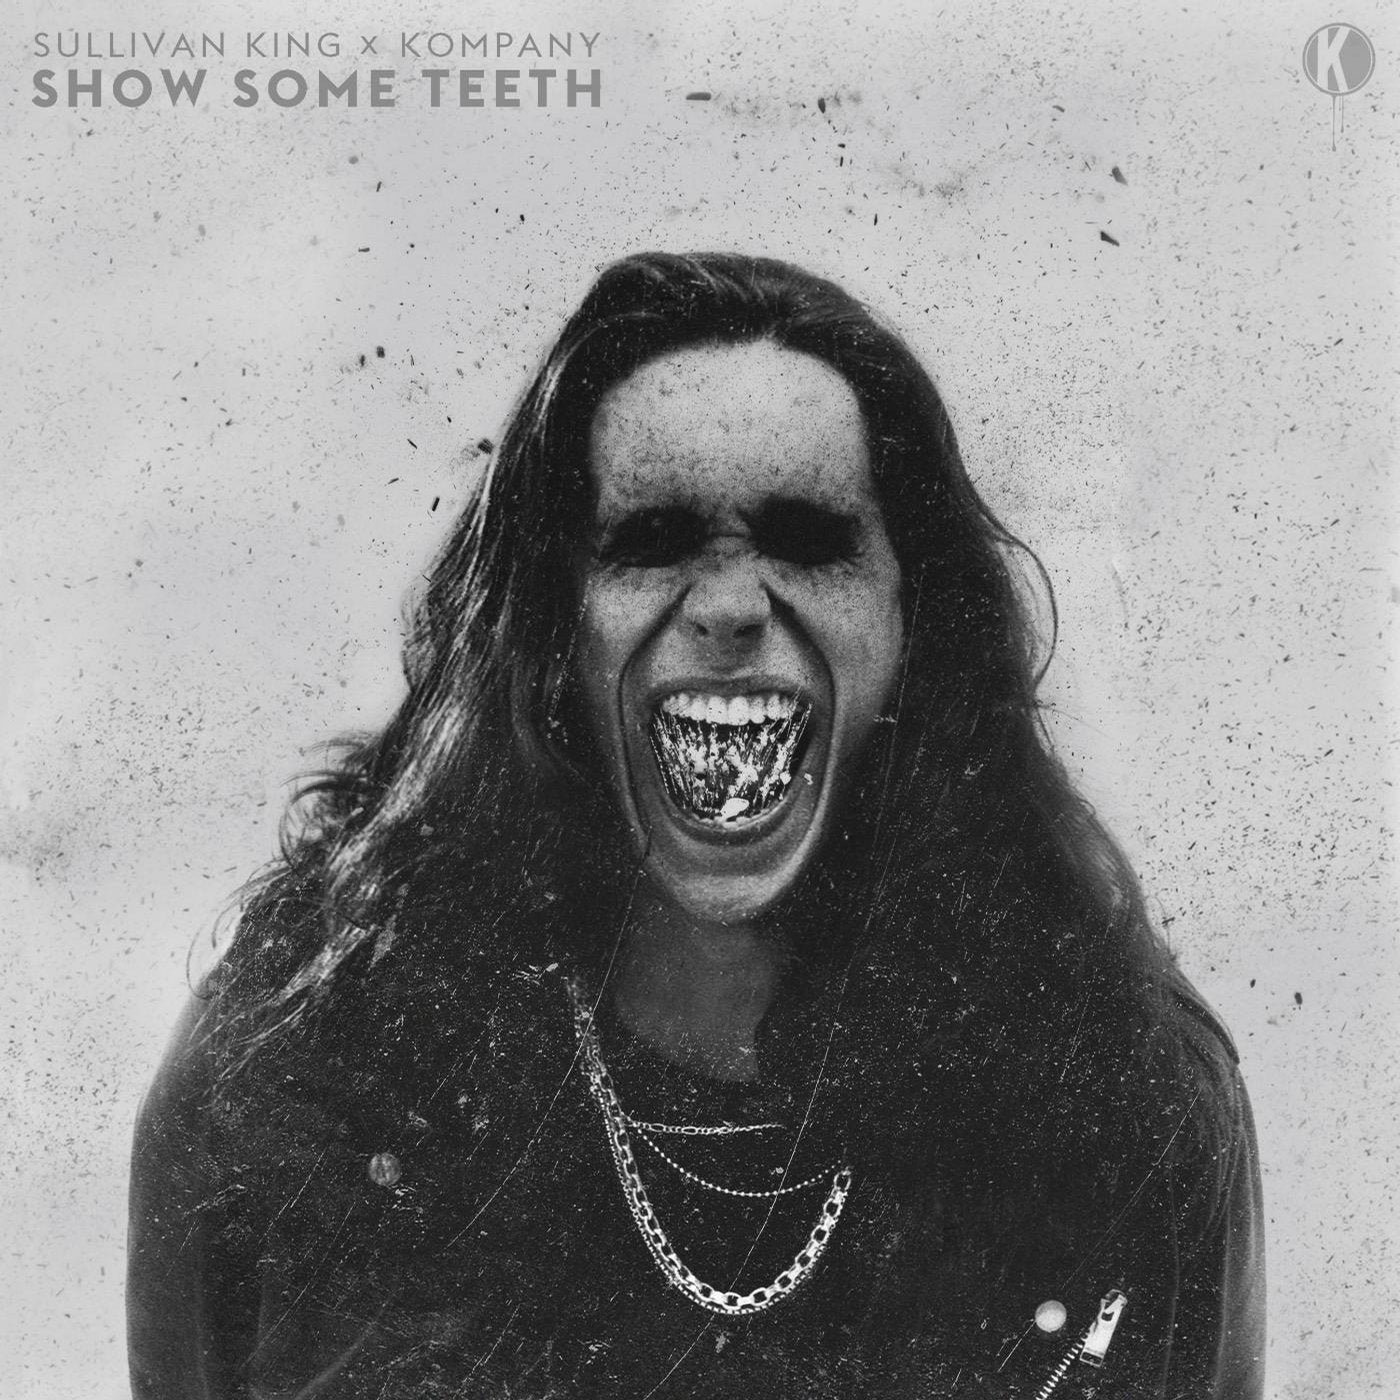 Show Some Teeth